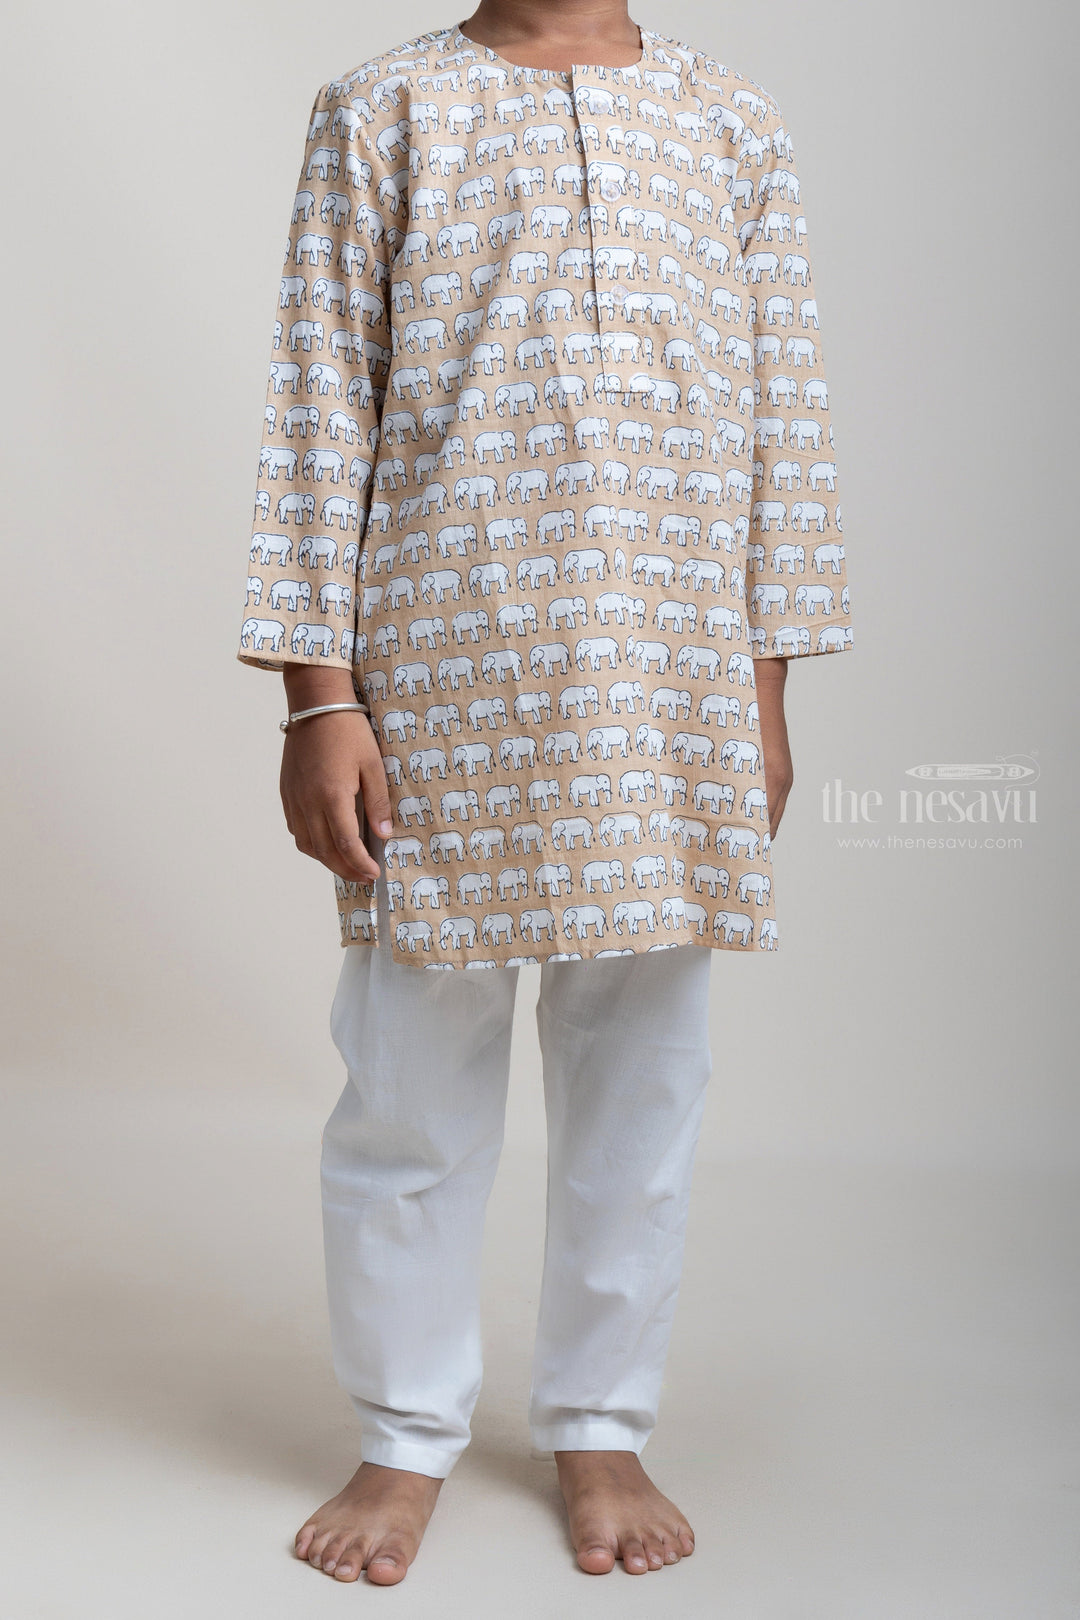 The Nesavu Boys Kurtha Set Light Brown Animal Printed Cotton Kurta And Pure White Pyjama For Boys psr silks Nesavu